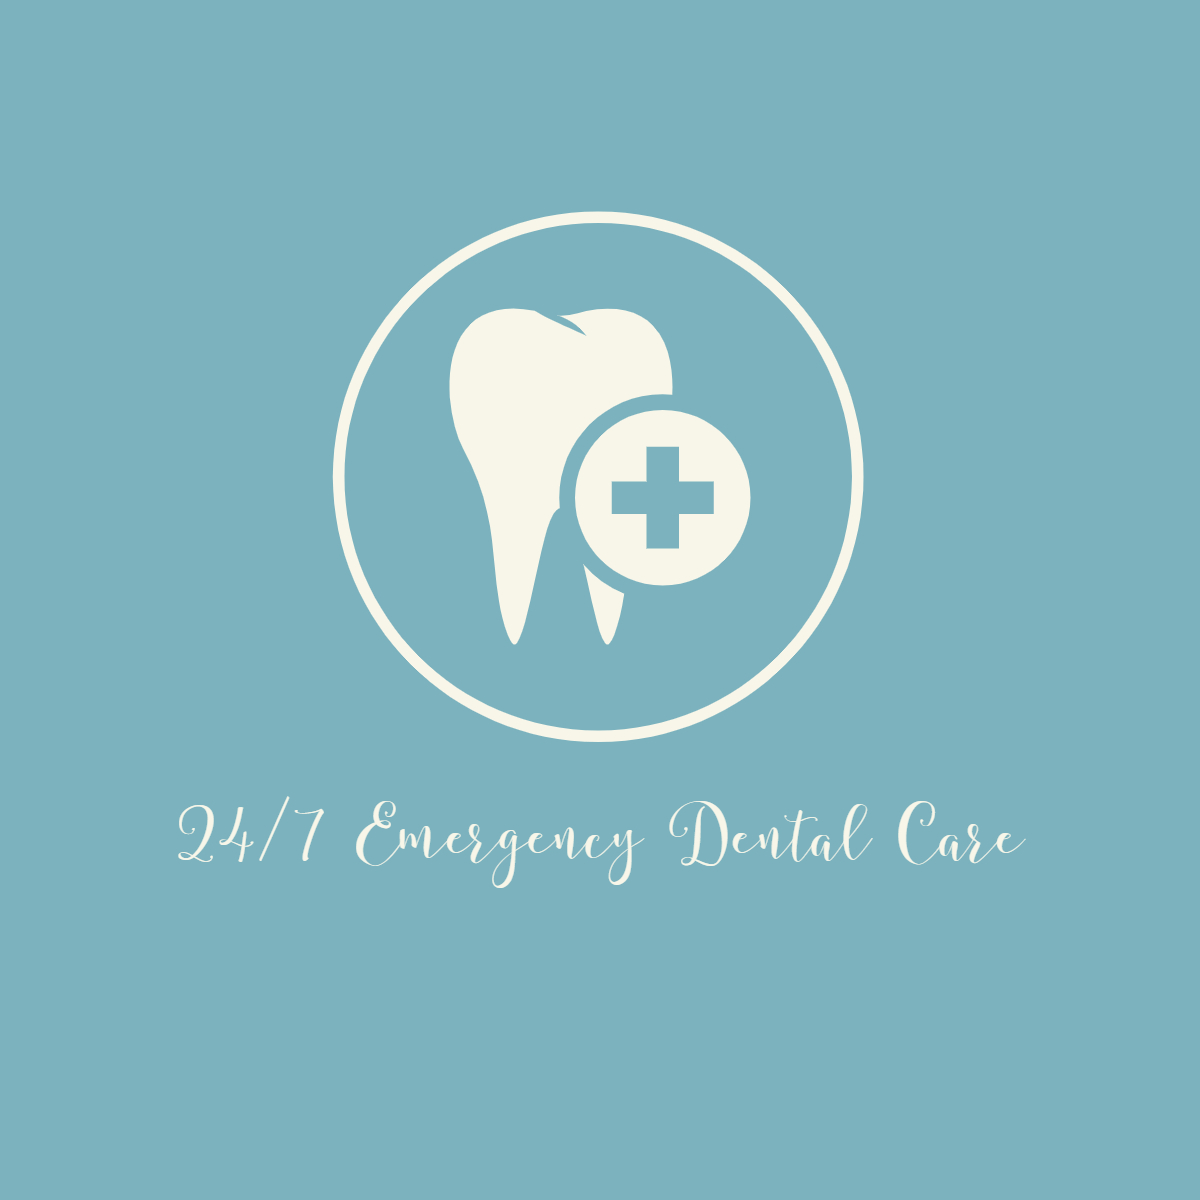 24/7 Emergency Dental Care